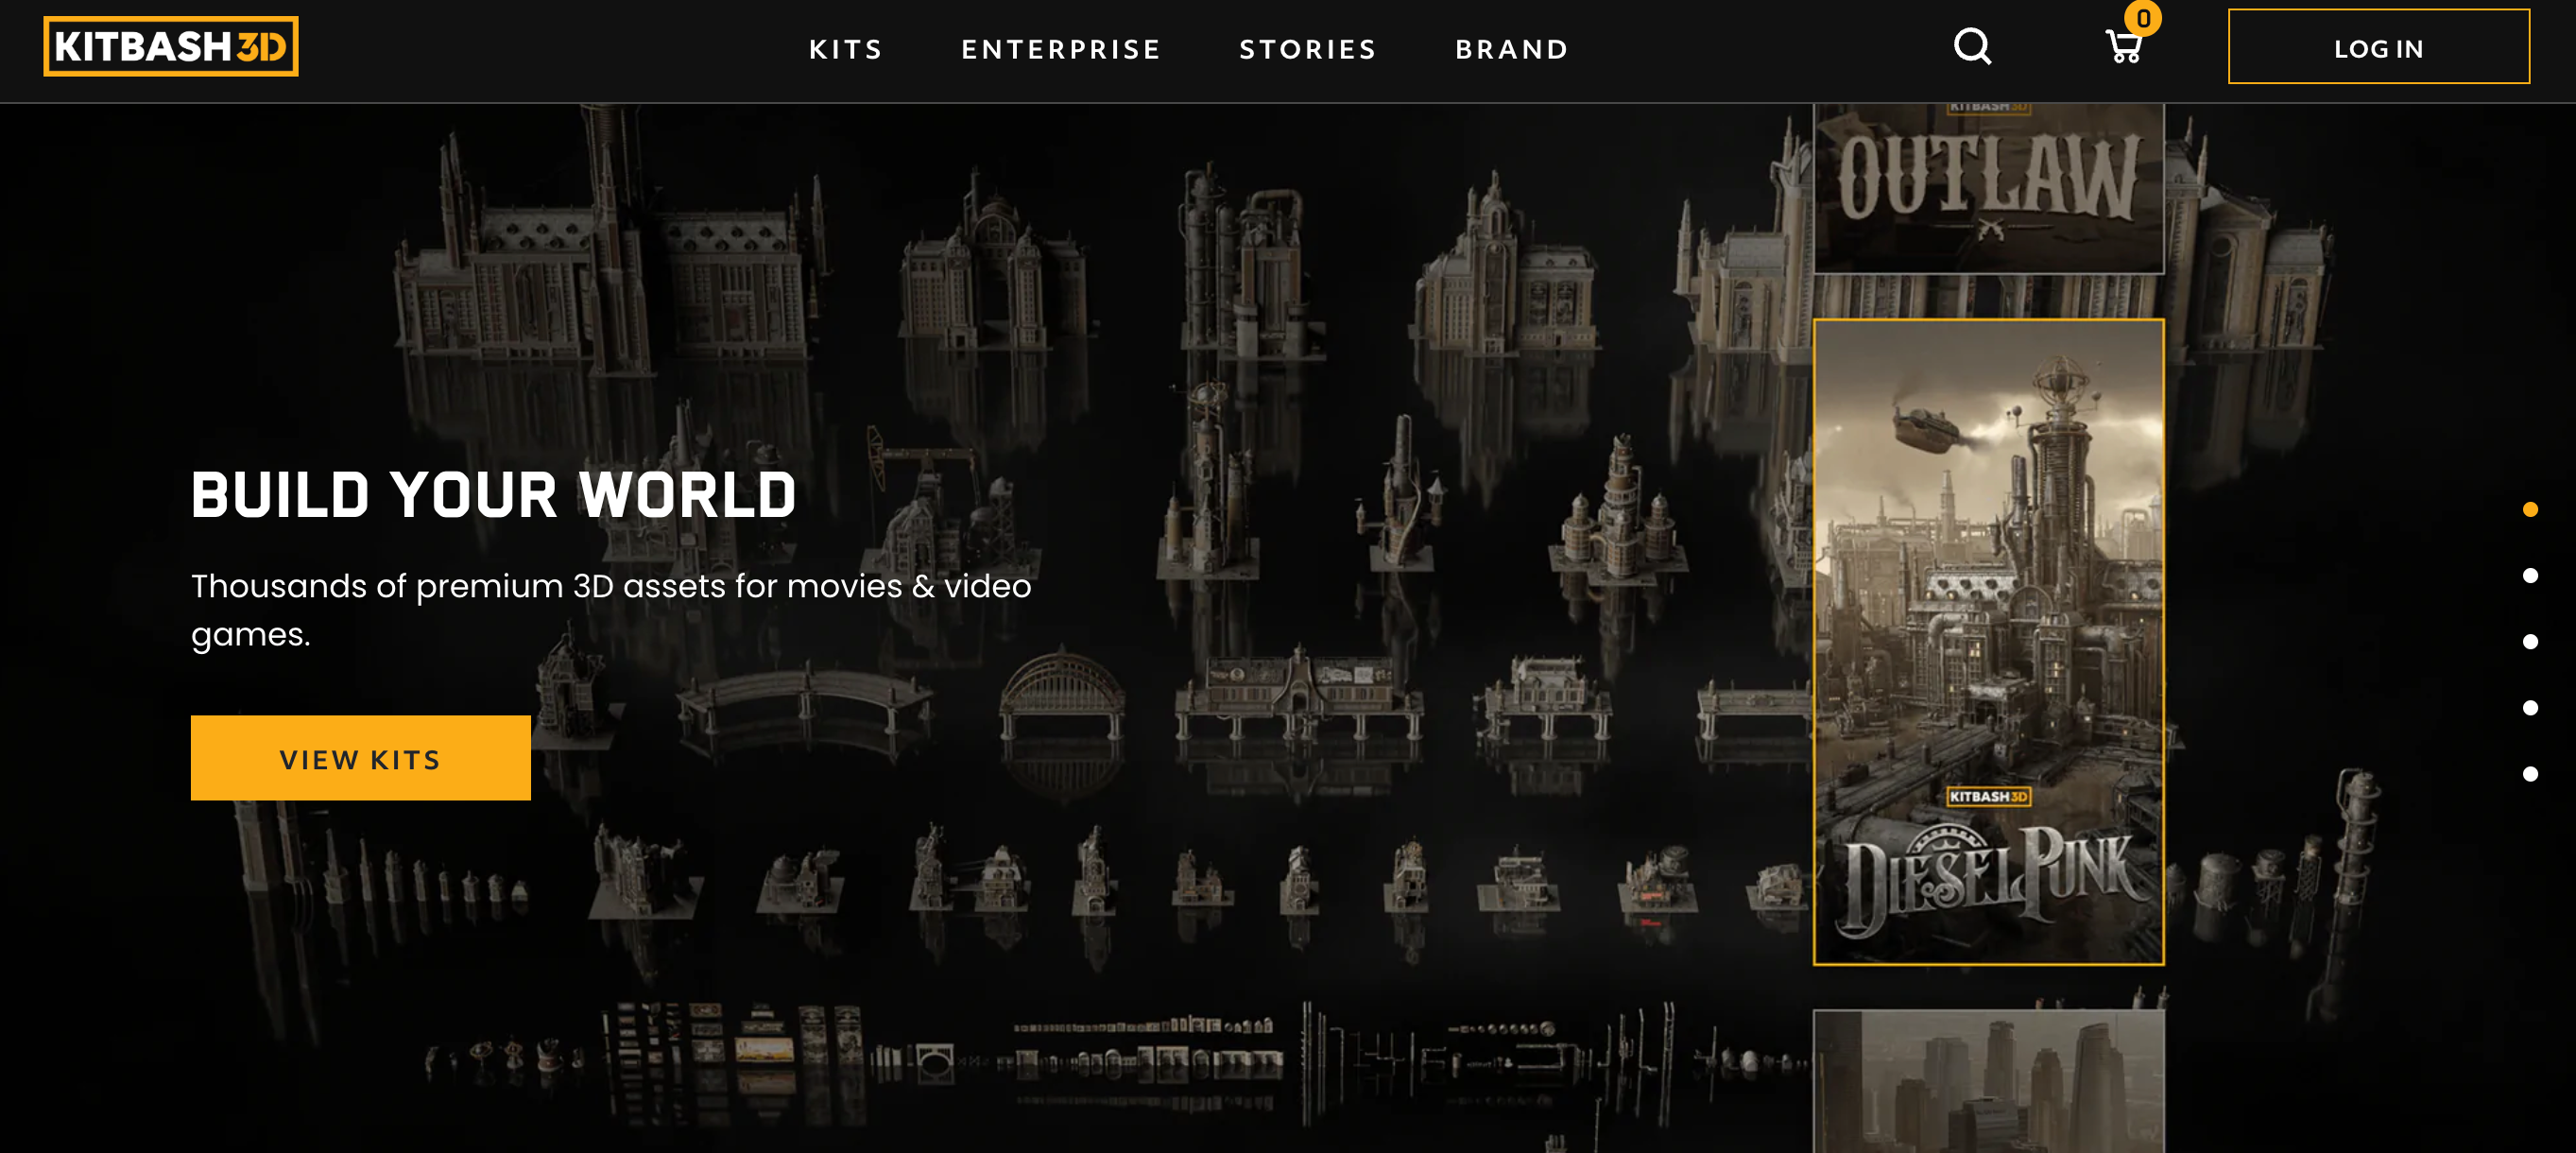 Screenshot of the KitBash3D homepage